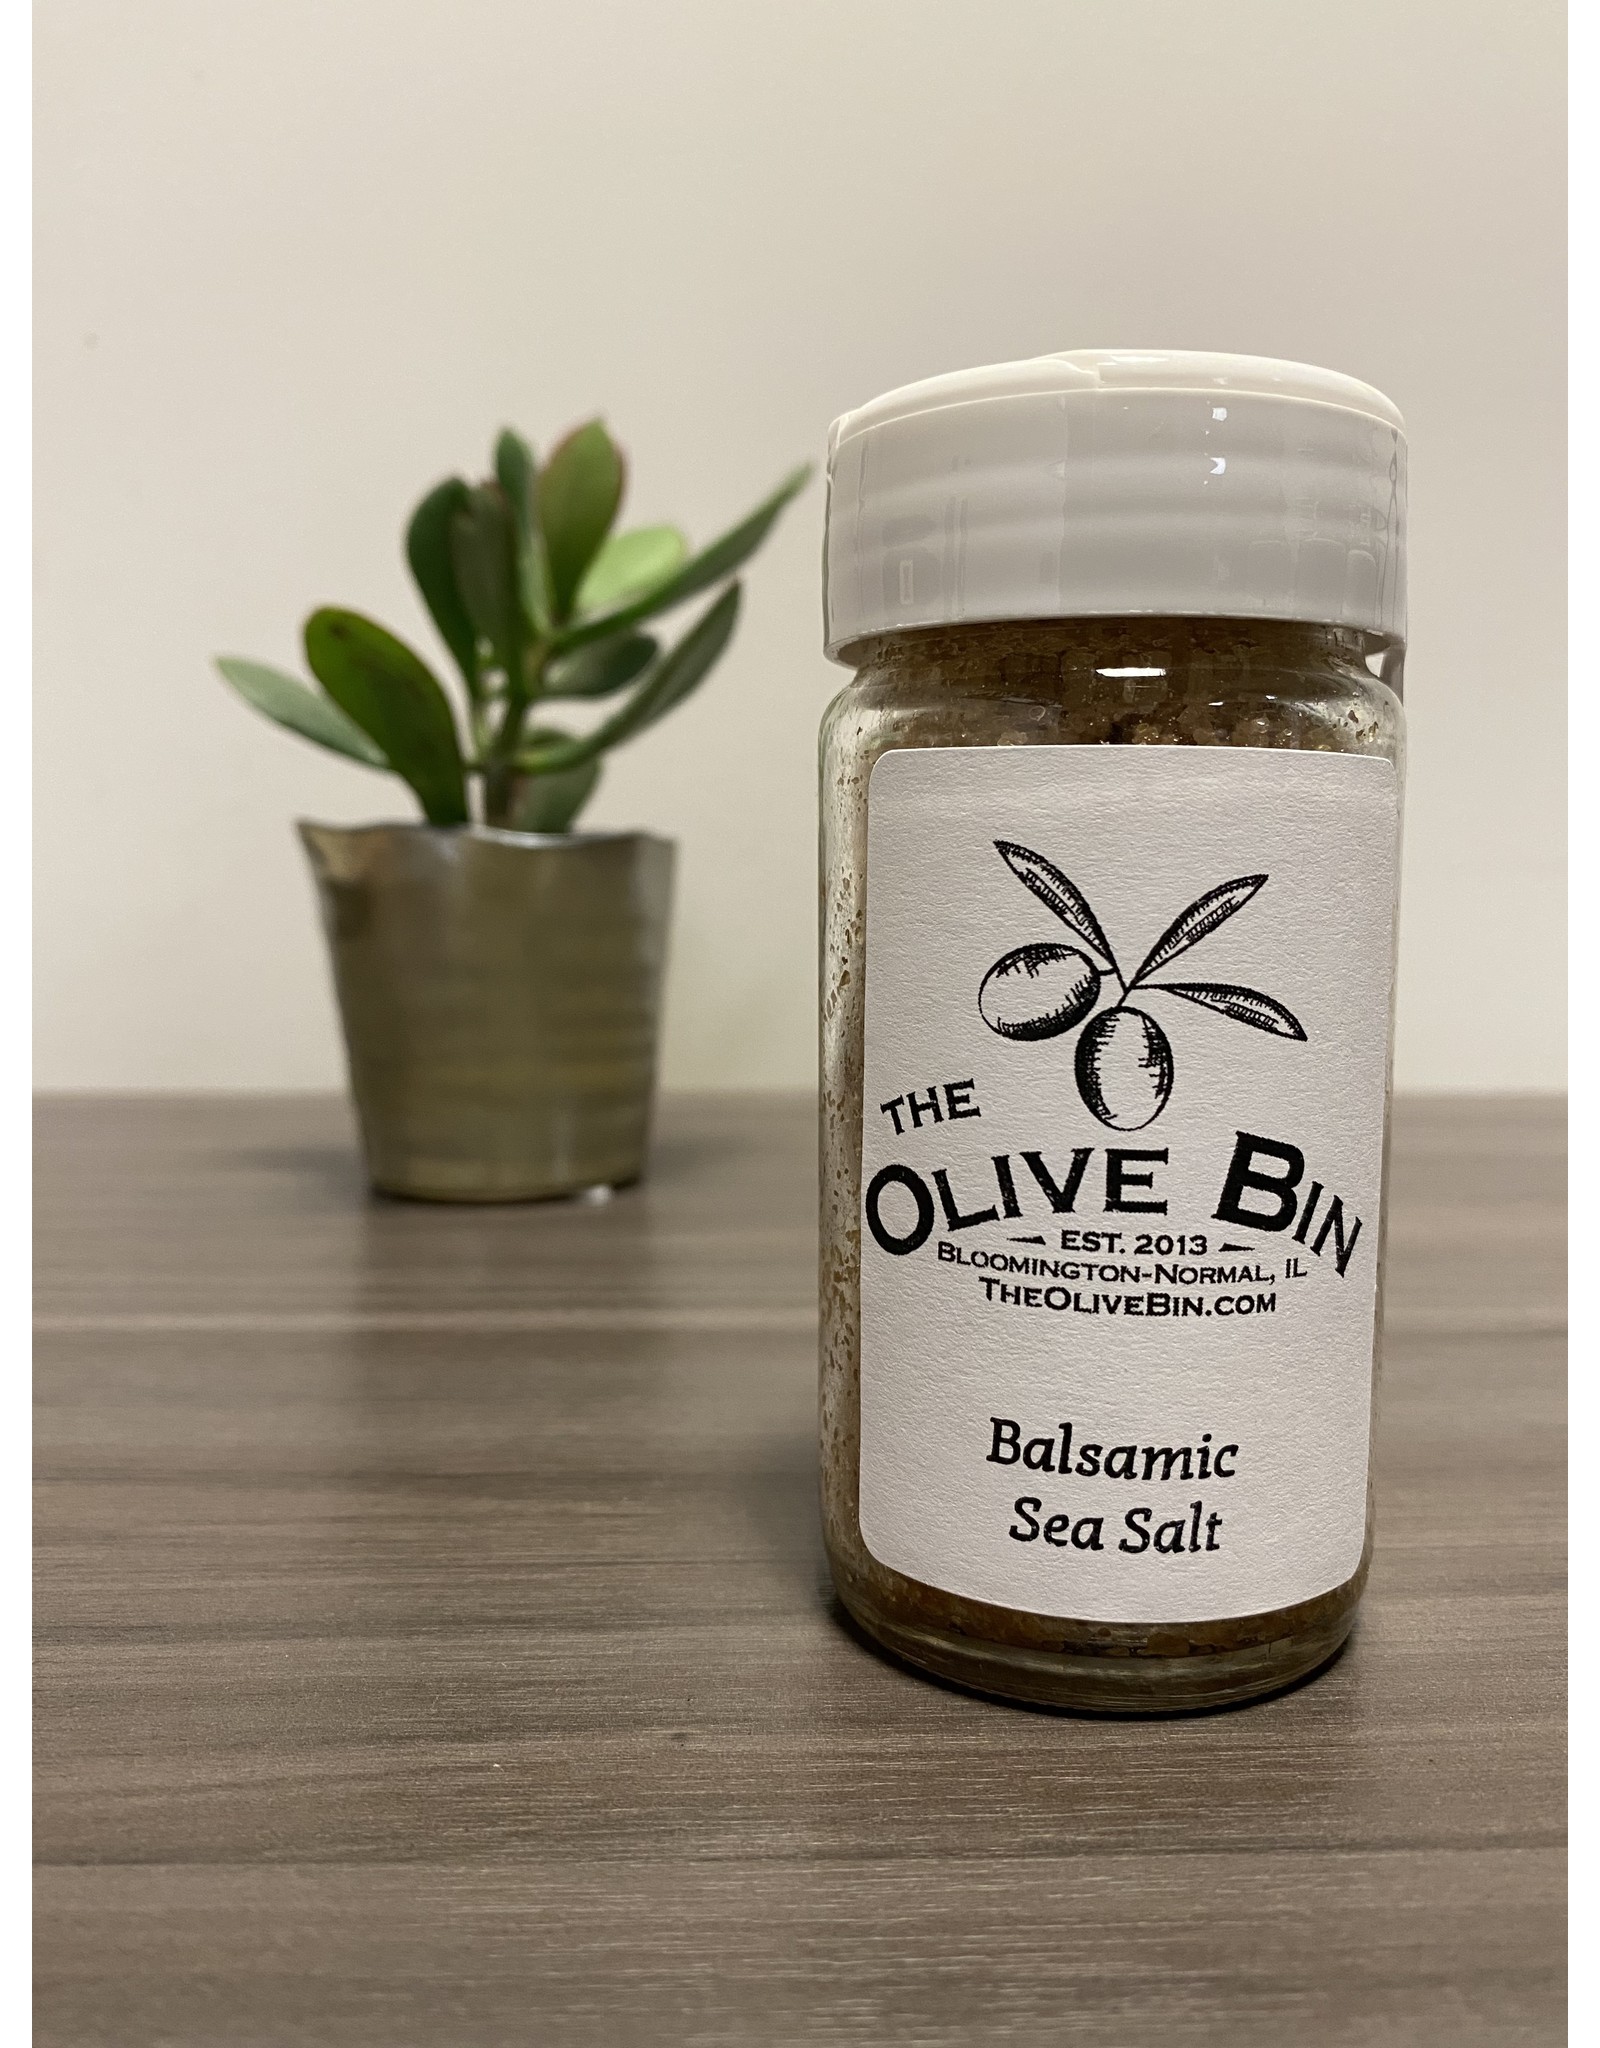 Balsamic Sea Salt